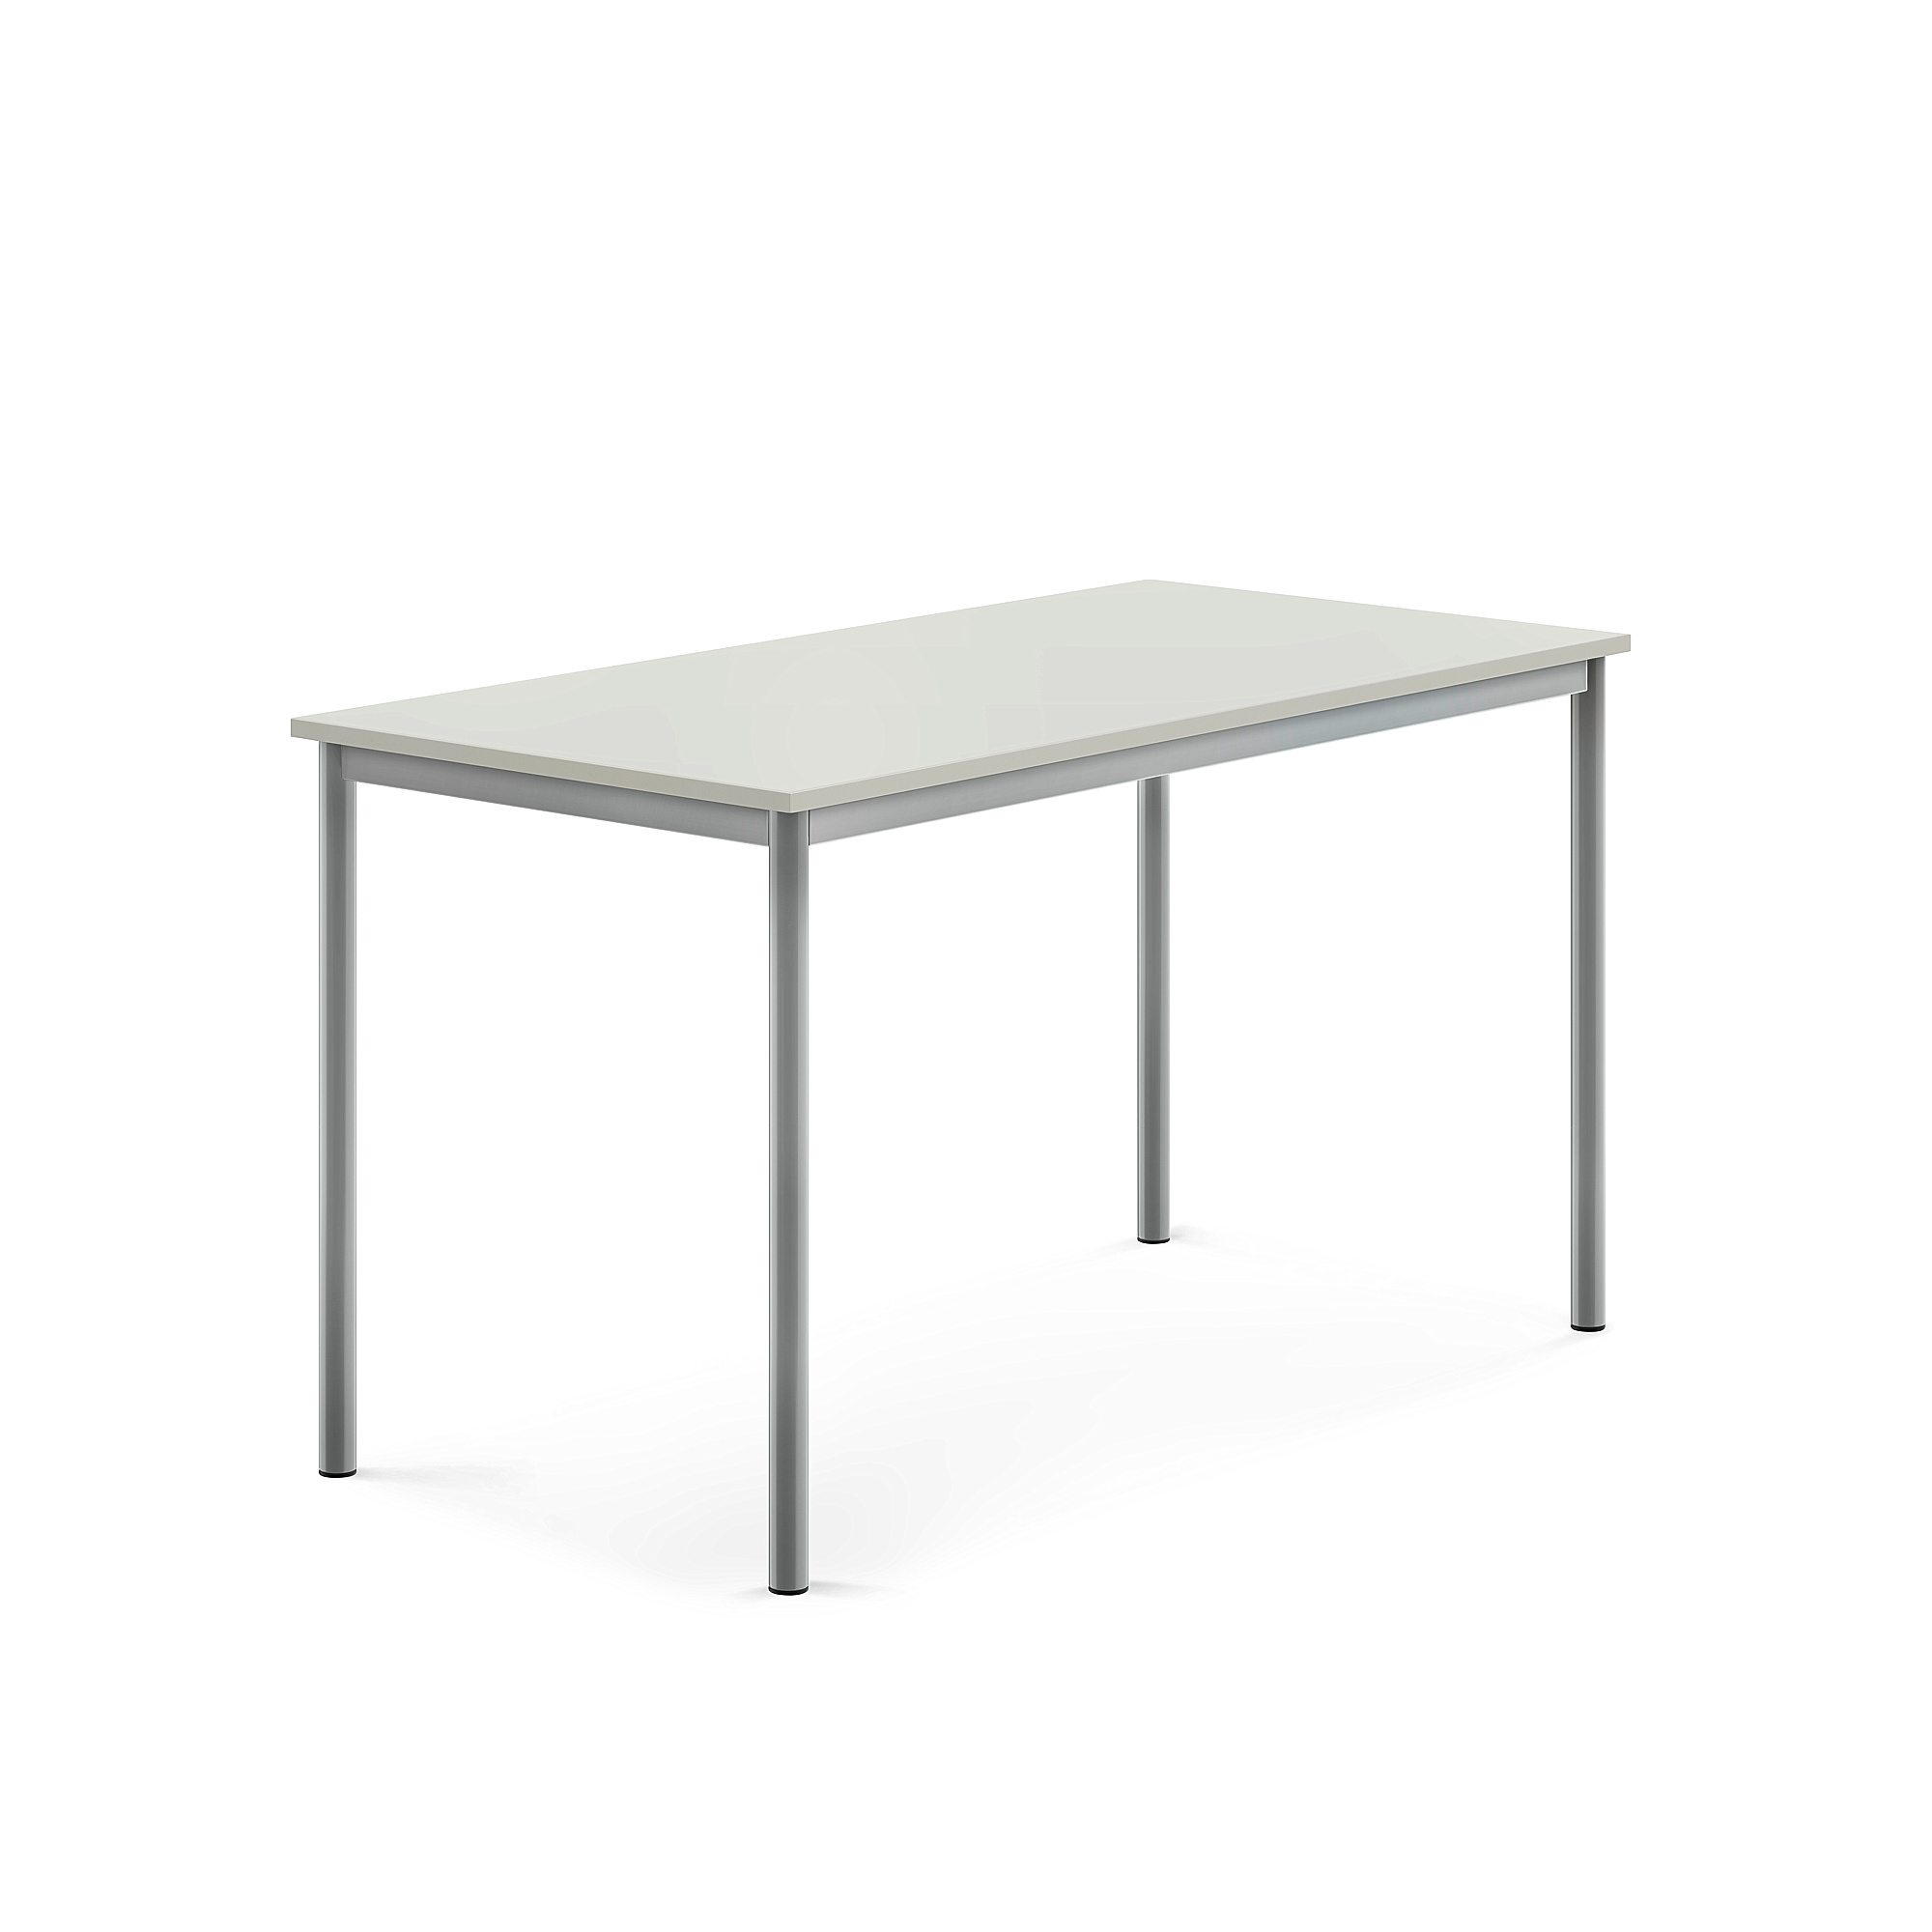 Stůl SONITUS, 1400x700x760 mm ,stříbrné nohy, HPL deska tlumící hluk, šedá